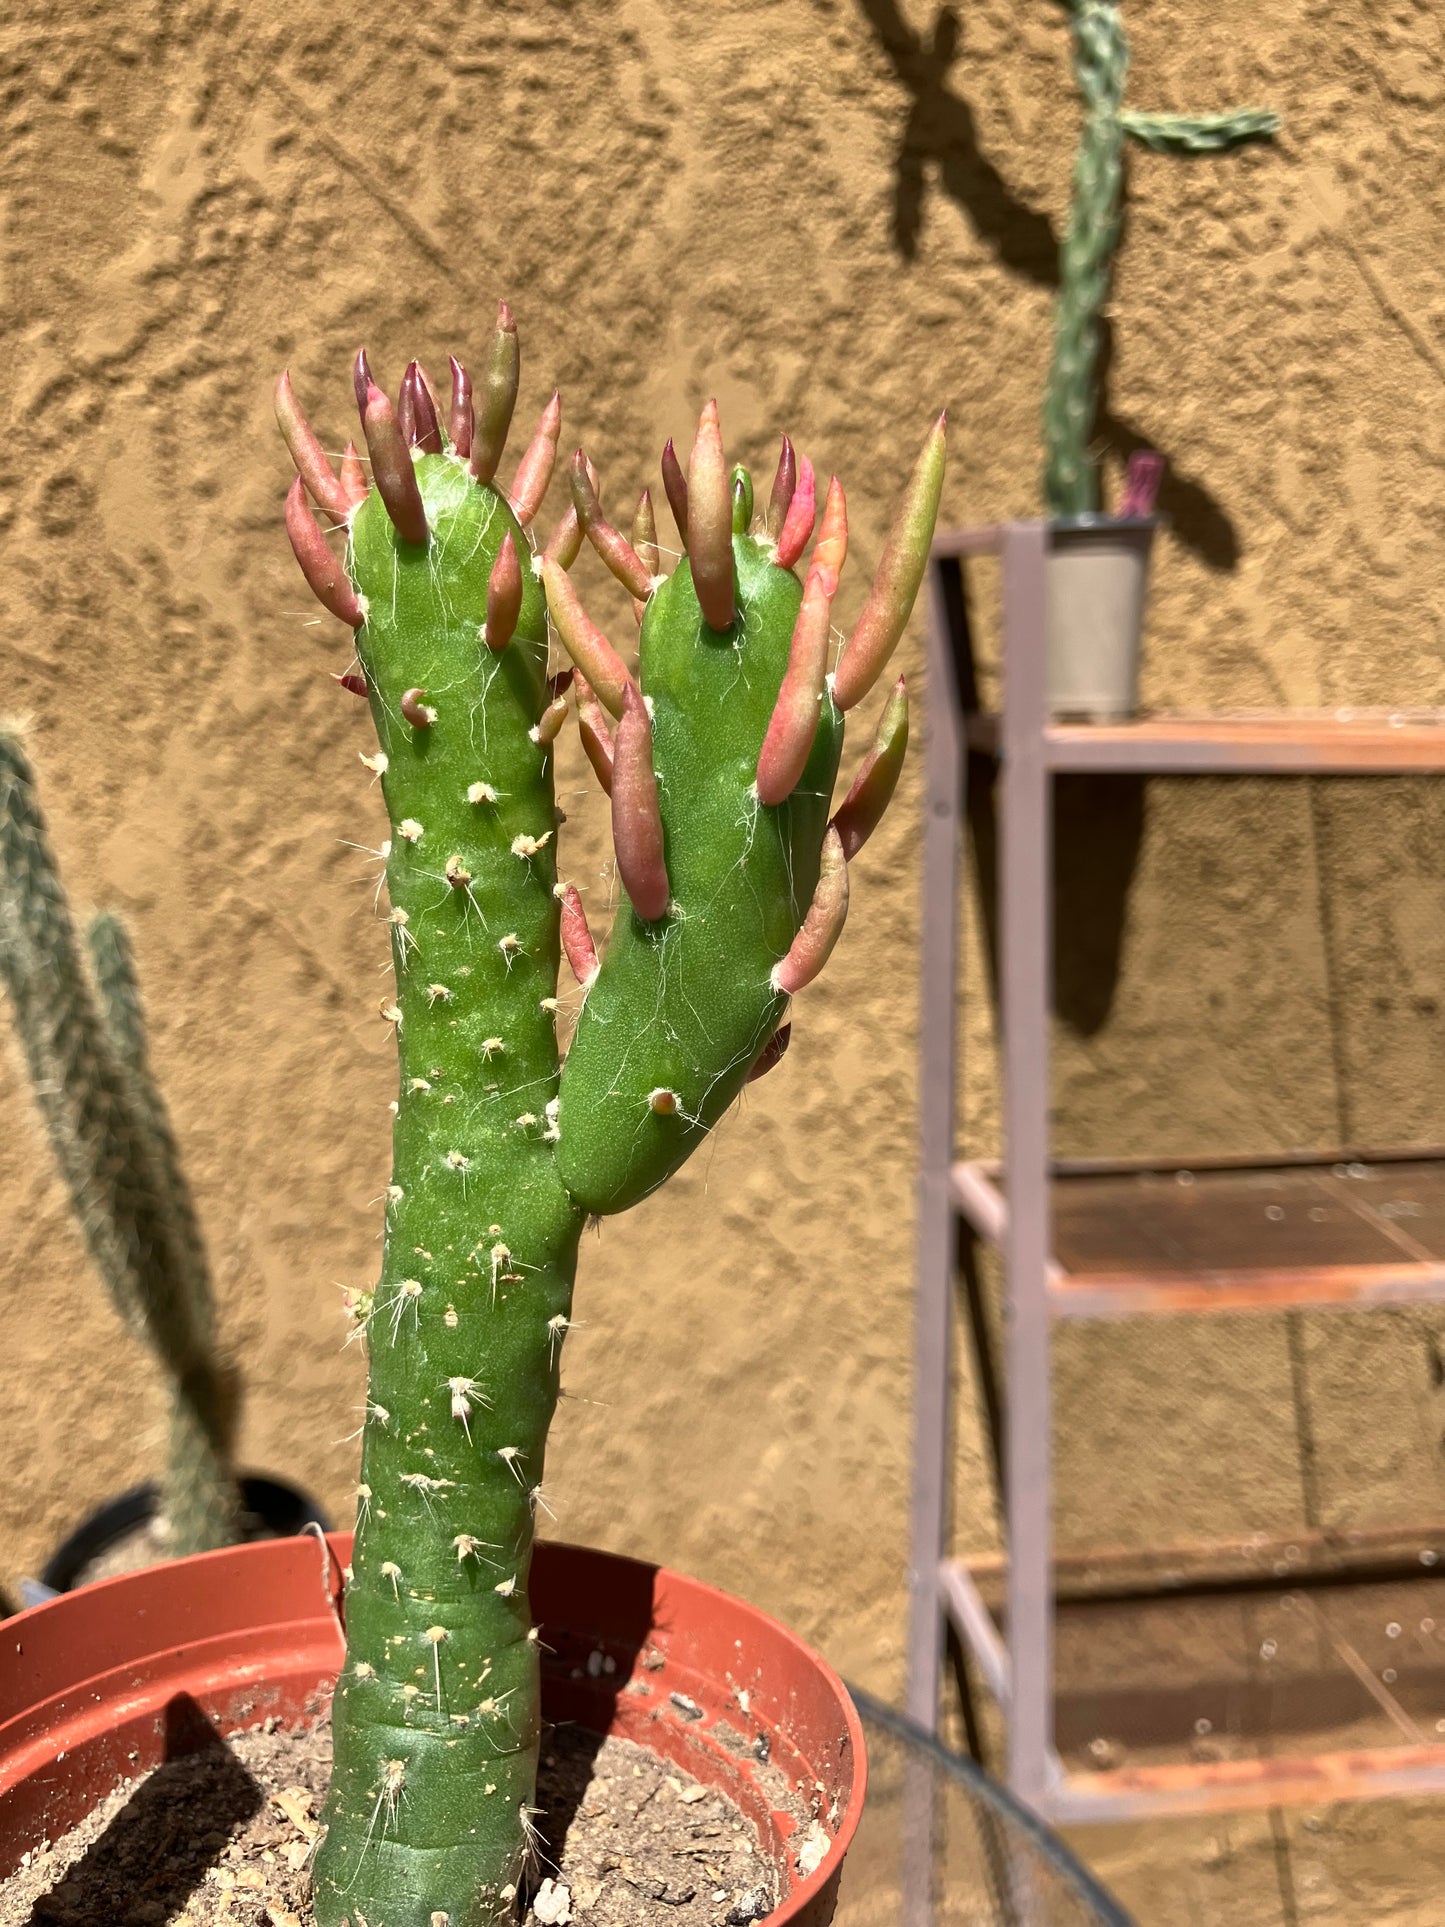 Austrocylindropuntia Cactus Gumbi Mini Eve's Needle 6"Tall #13W